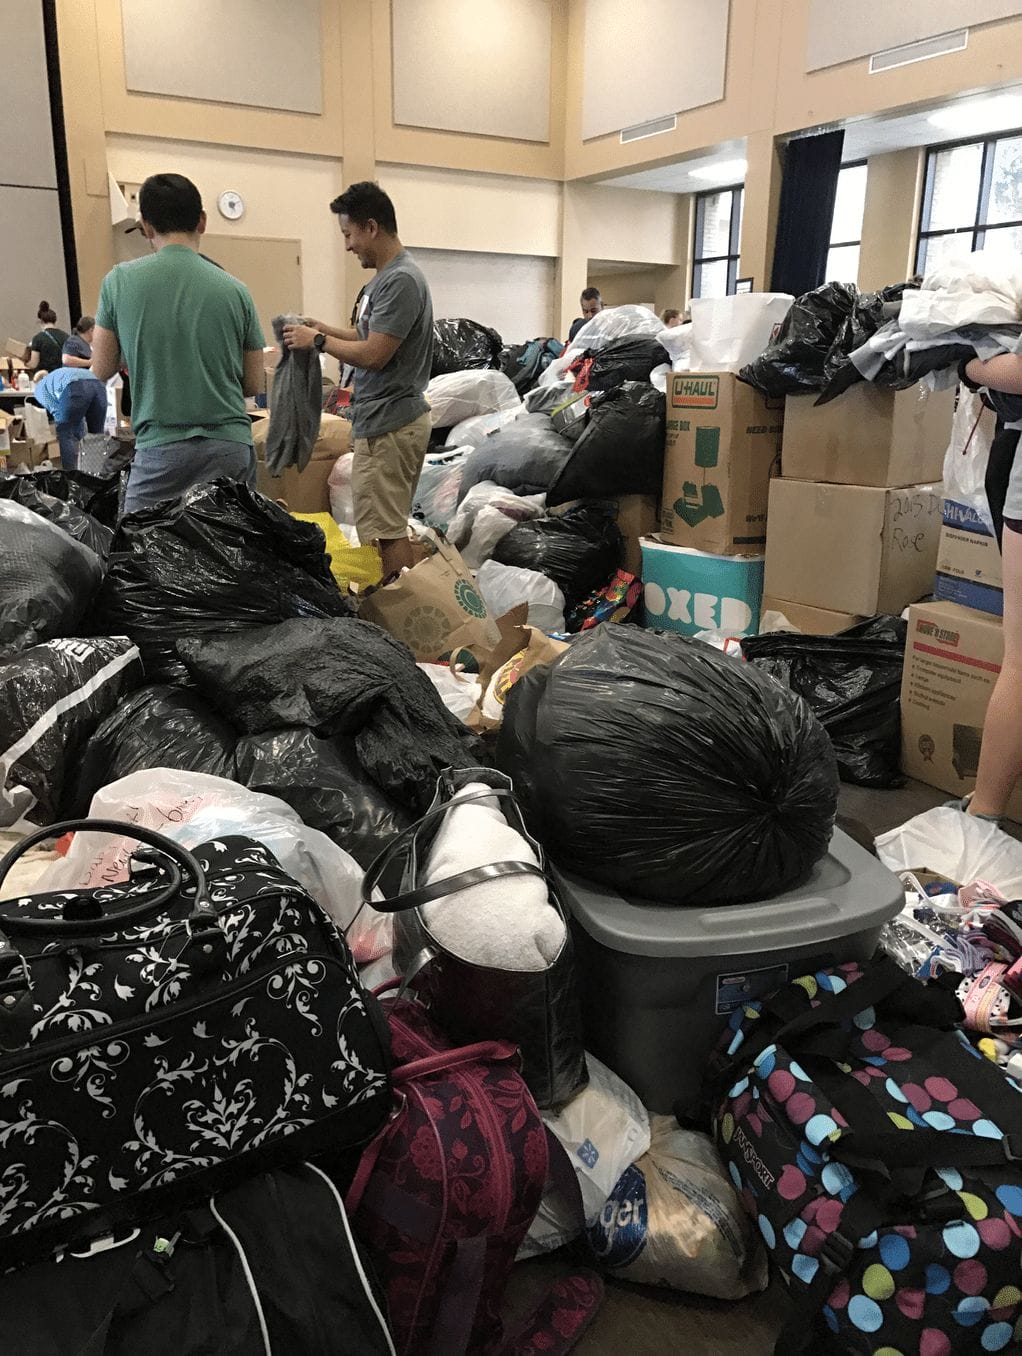 Hurricane Harvey donations